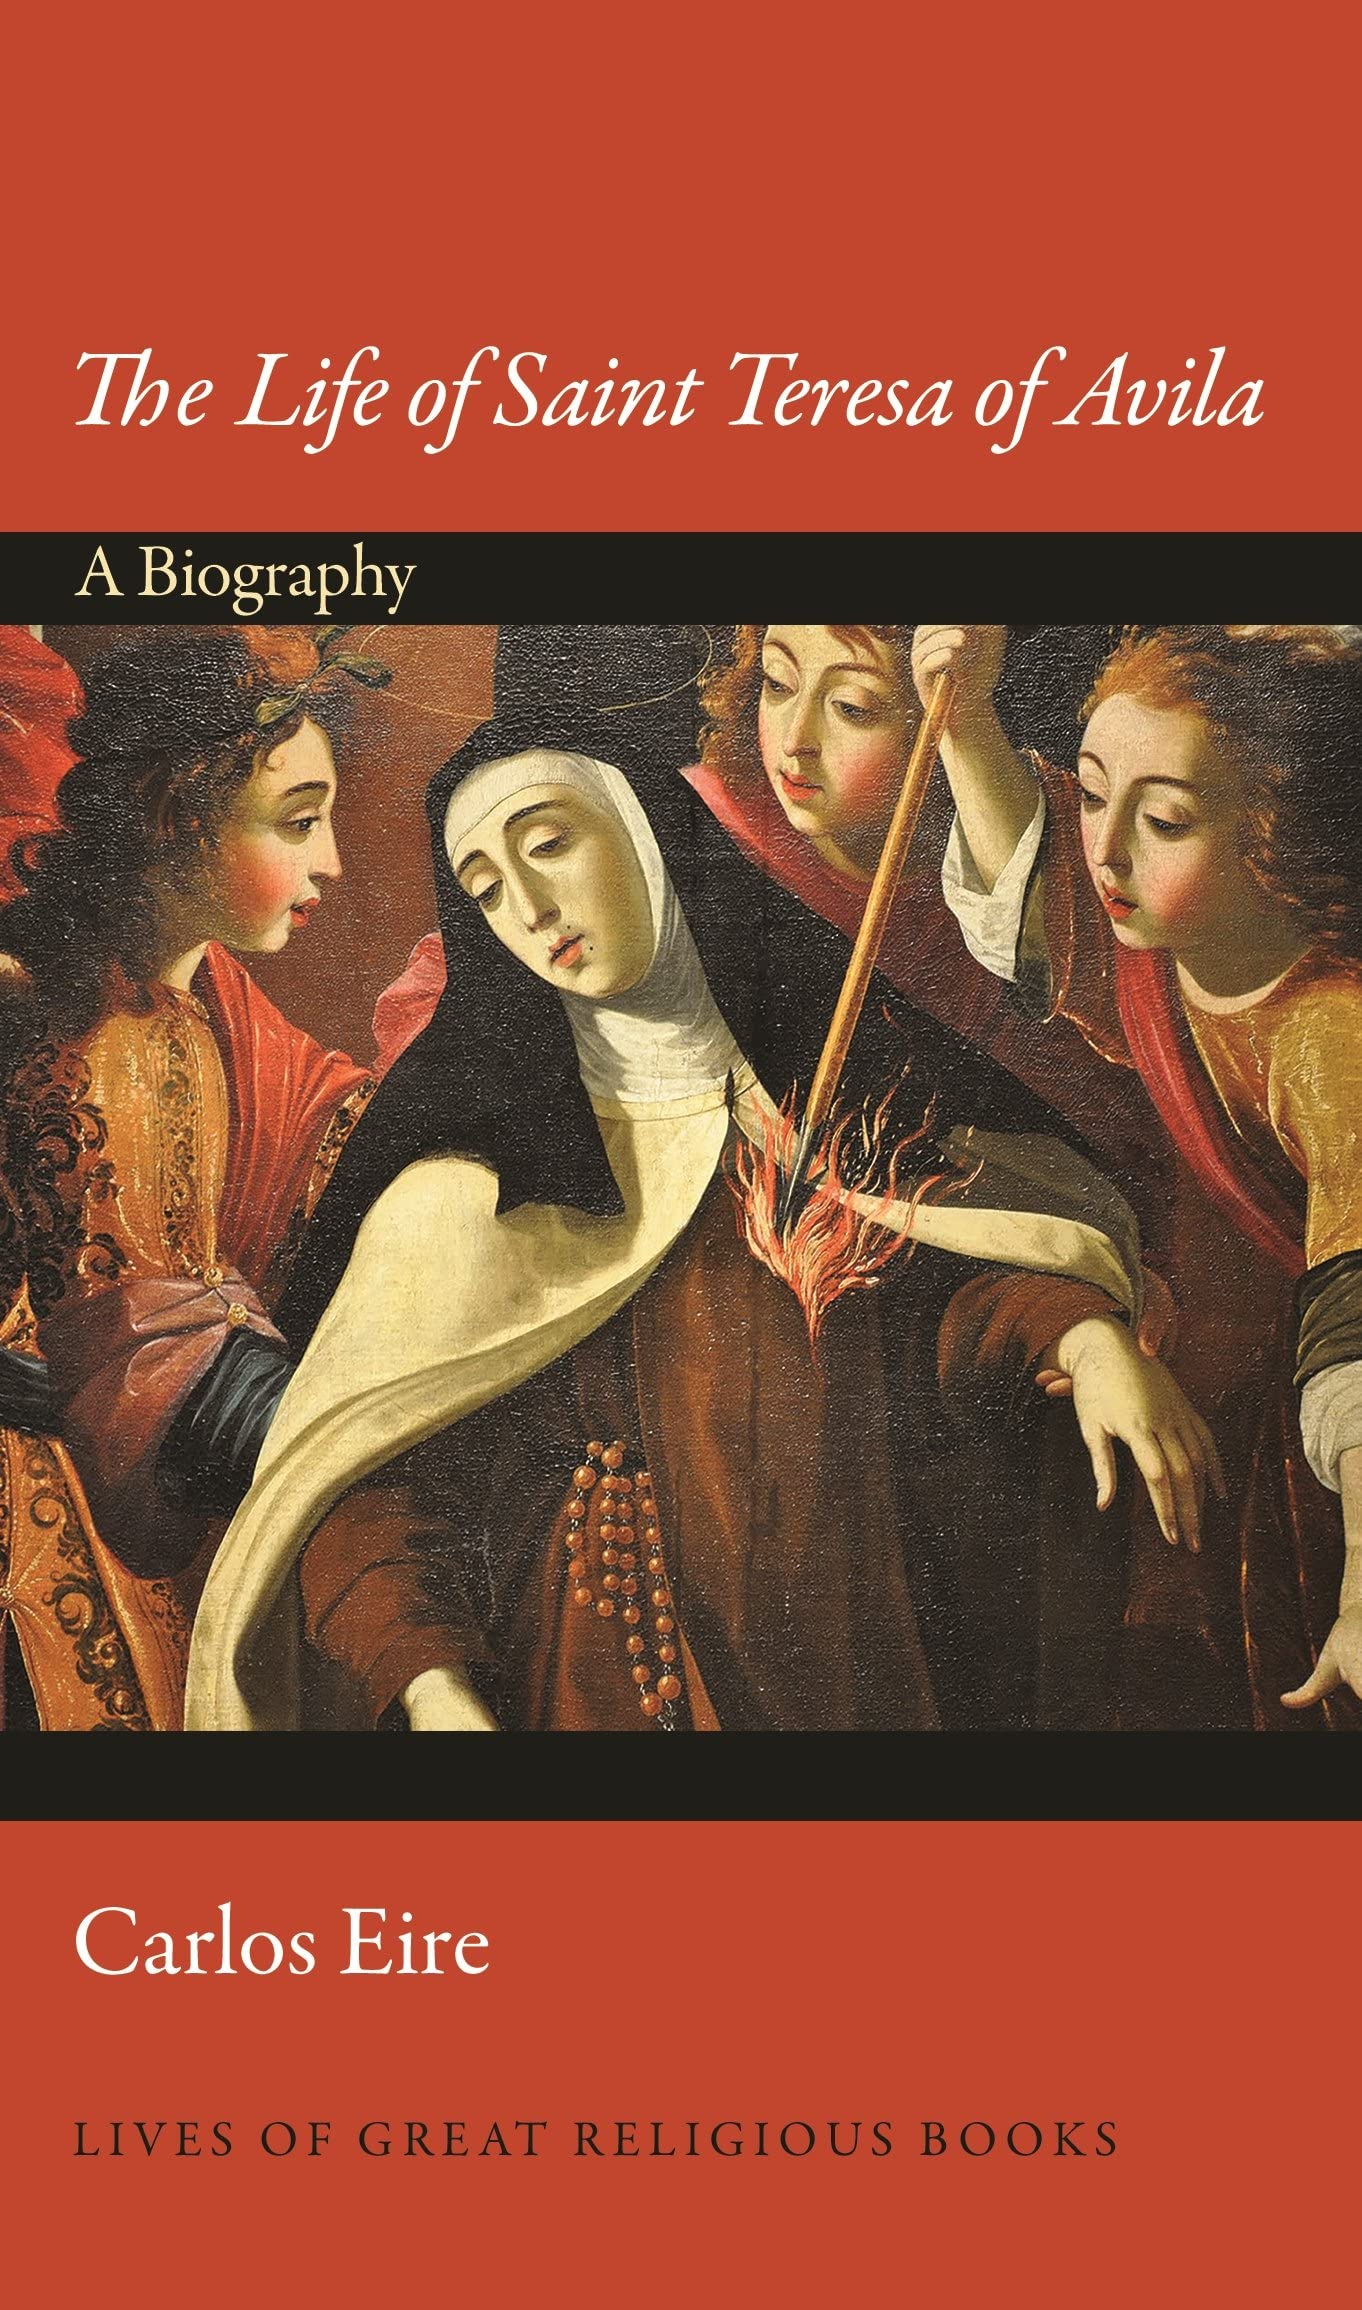 The Life of Saint Teresa of Avila: A Biography (Lives of Great Religious Books, 31)